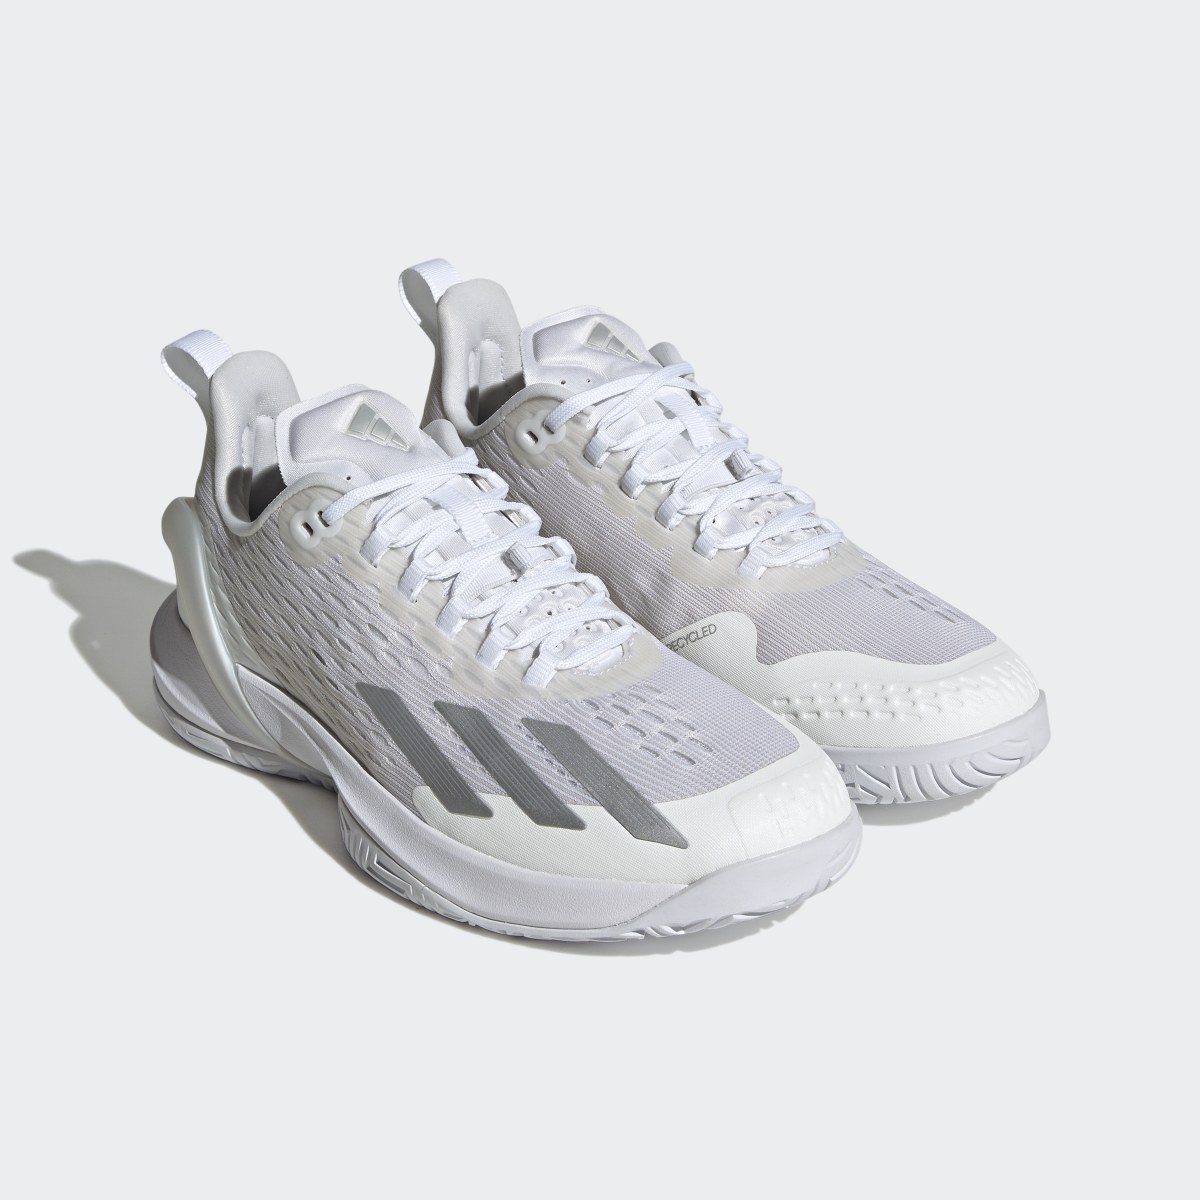 Adidas Chaussure de tennis adizero Cybersonic. 8